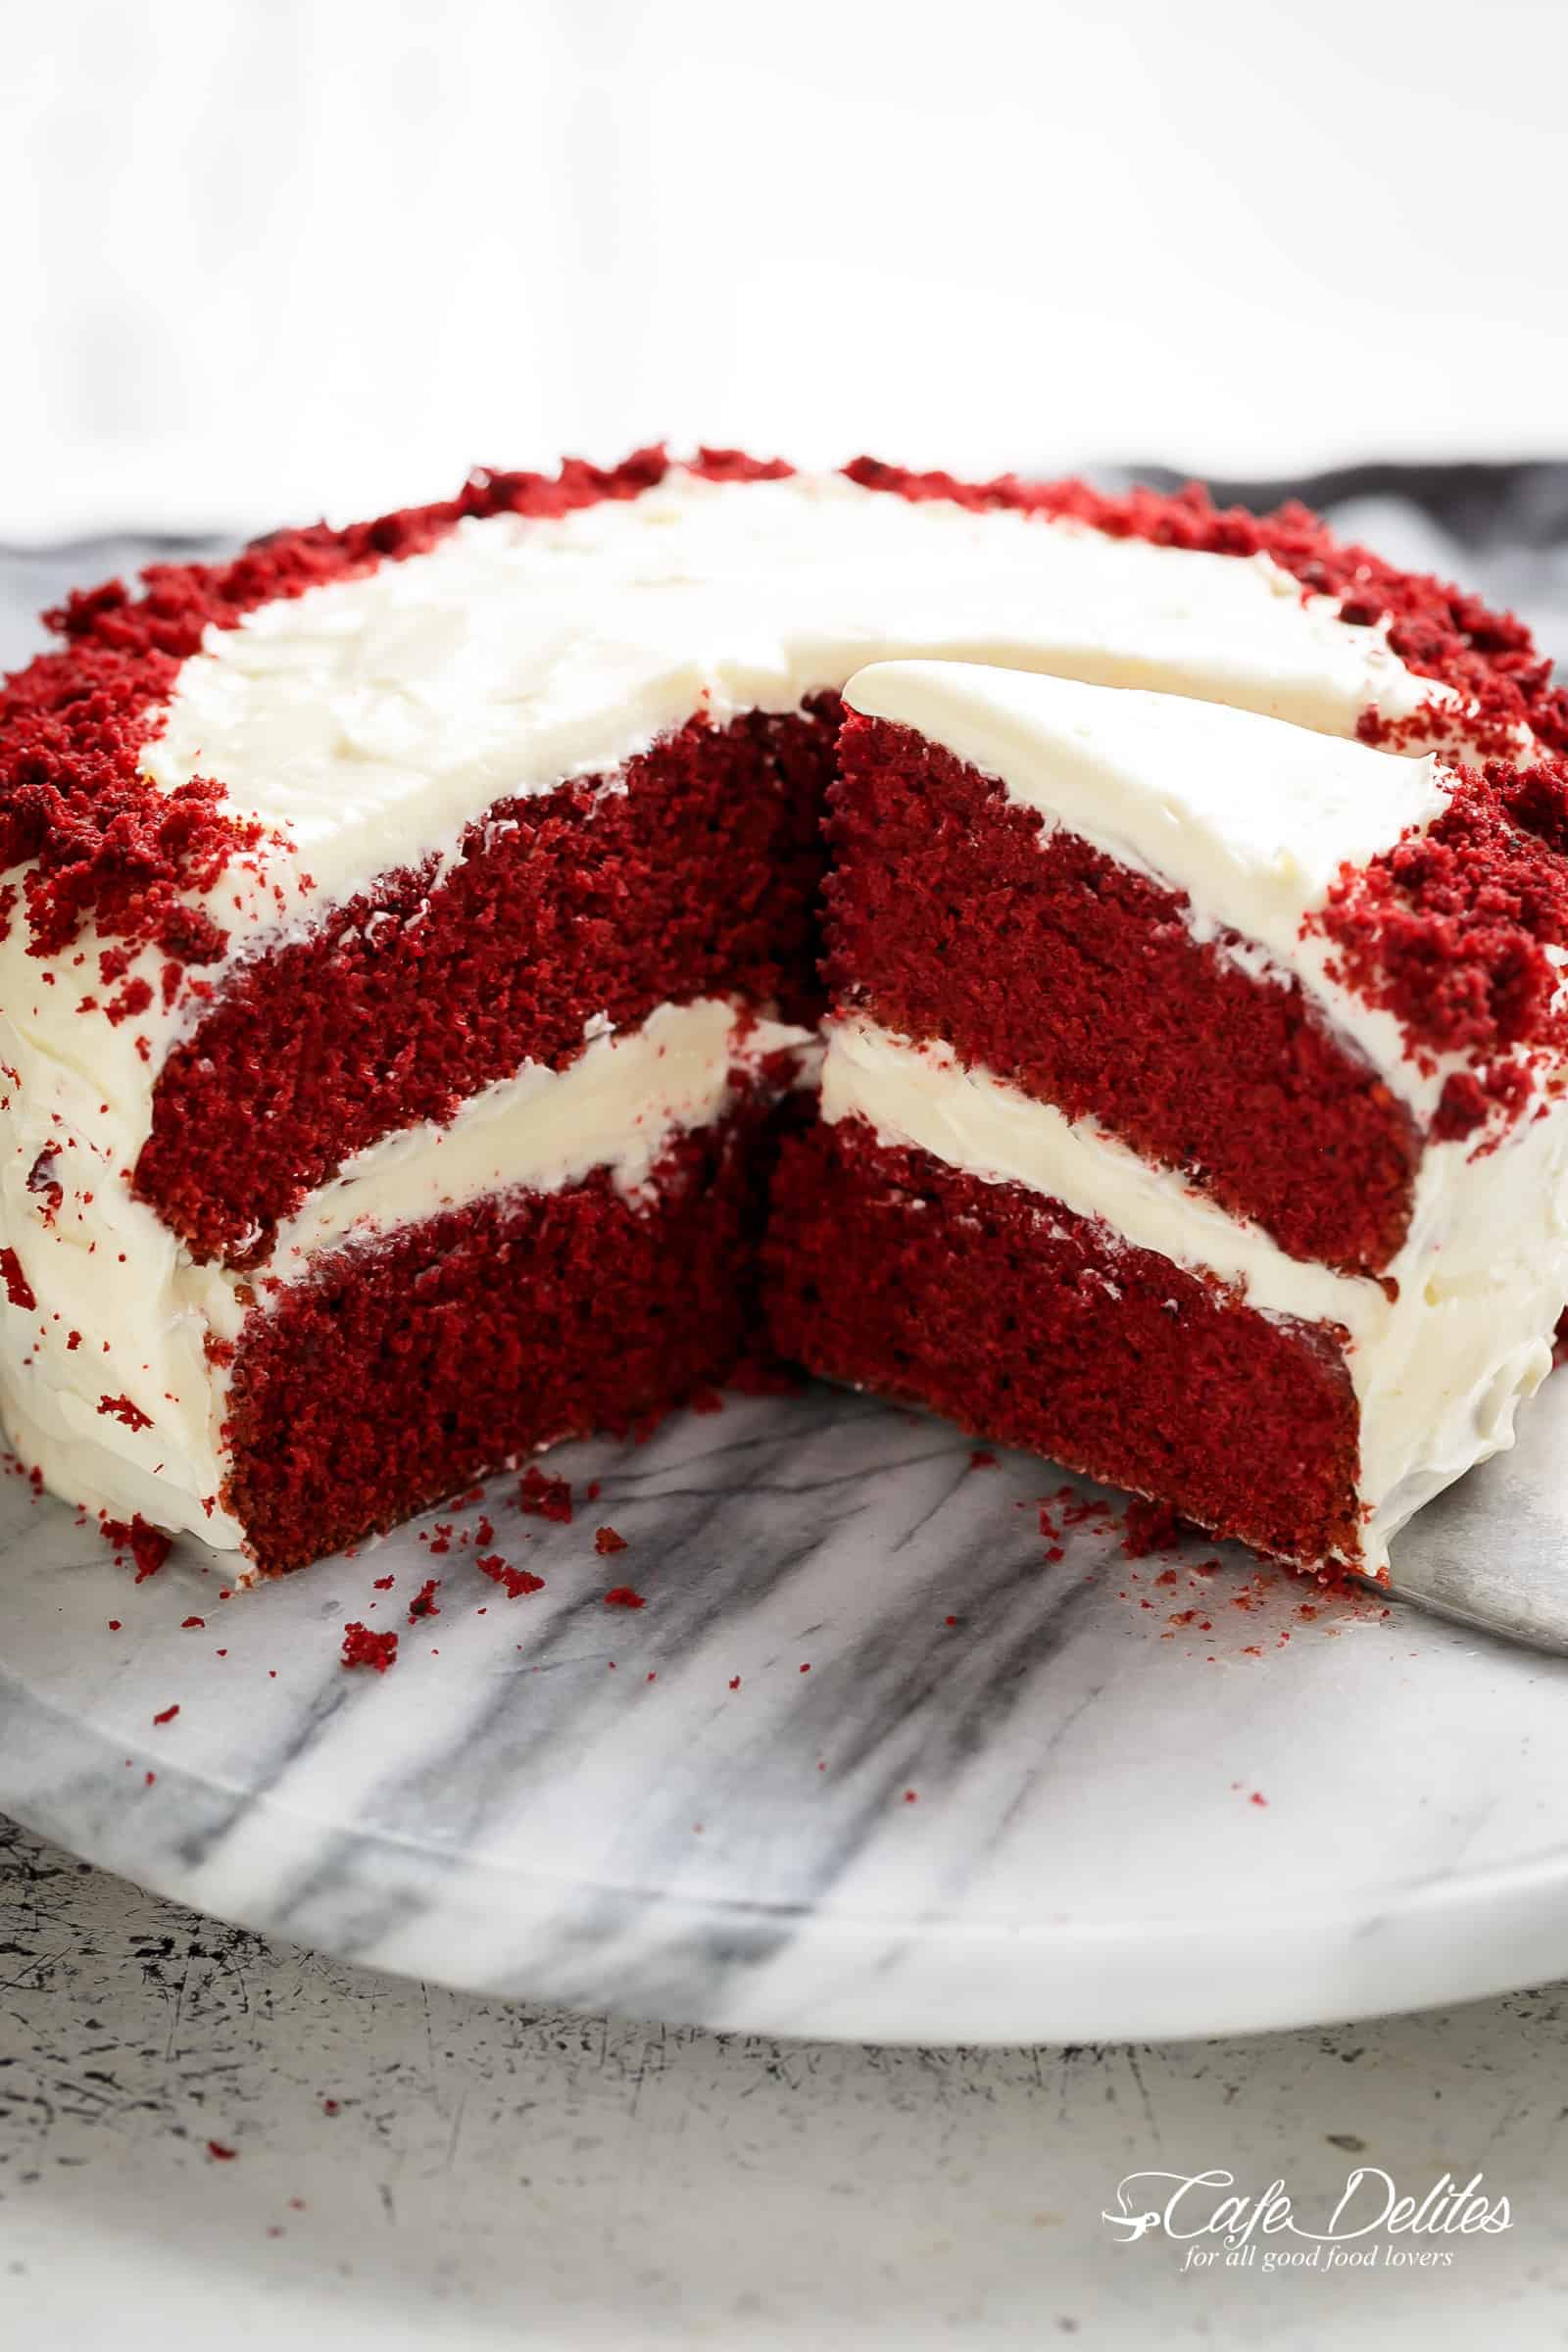 Small Red Velvet Cake (6 Inch) - Homemade In The Kitchen